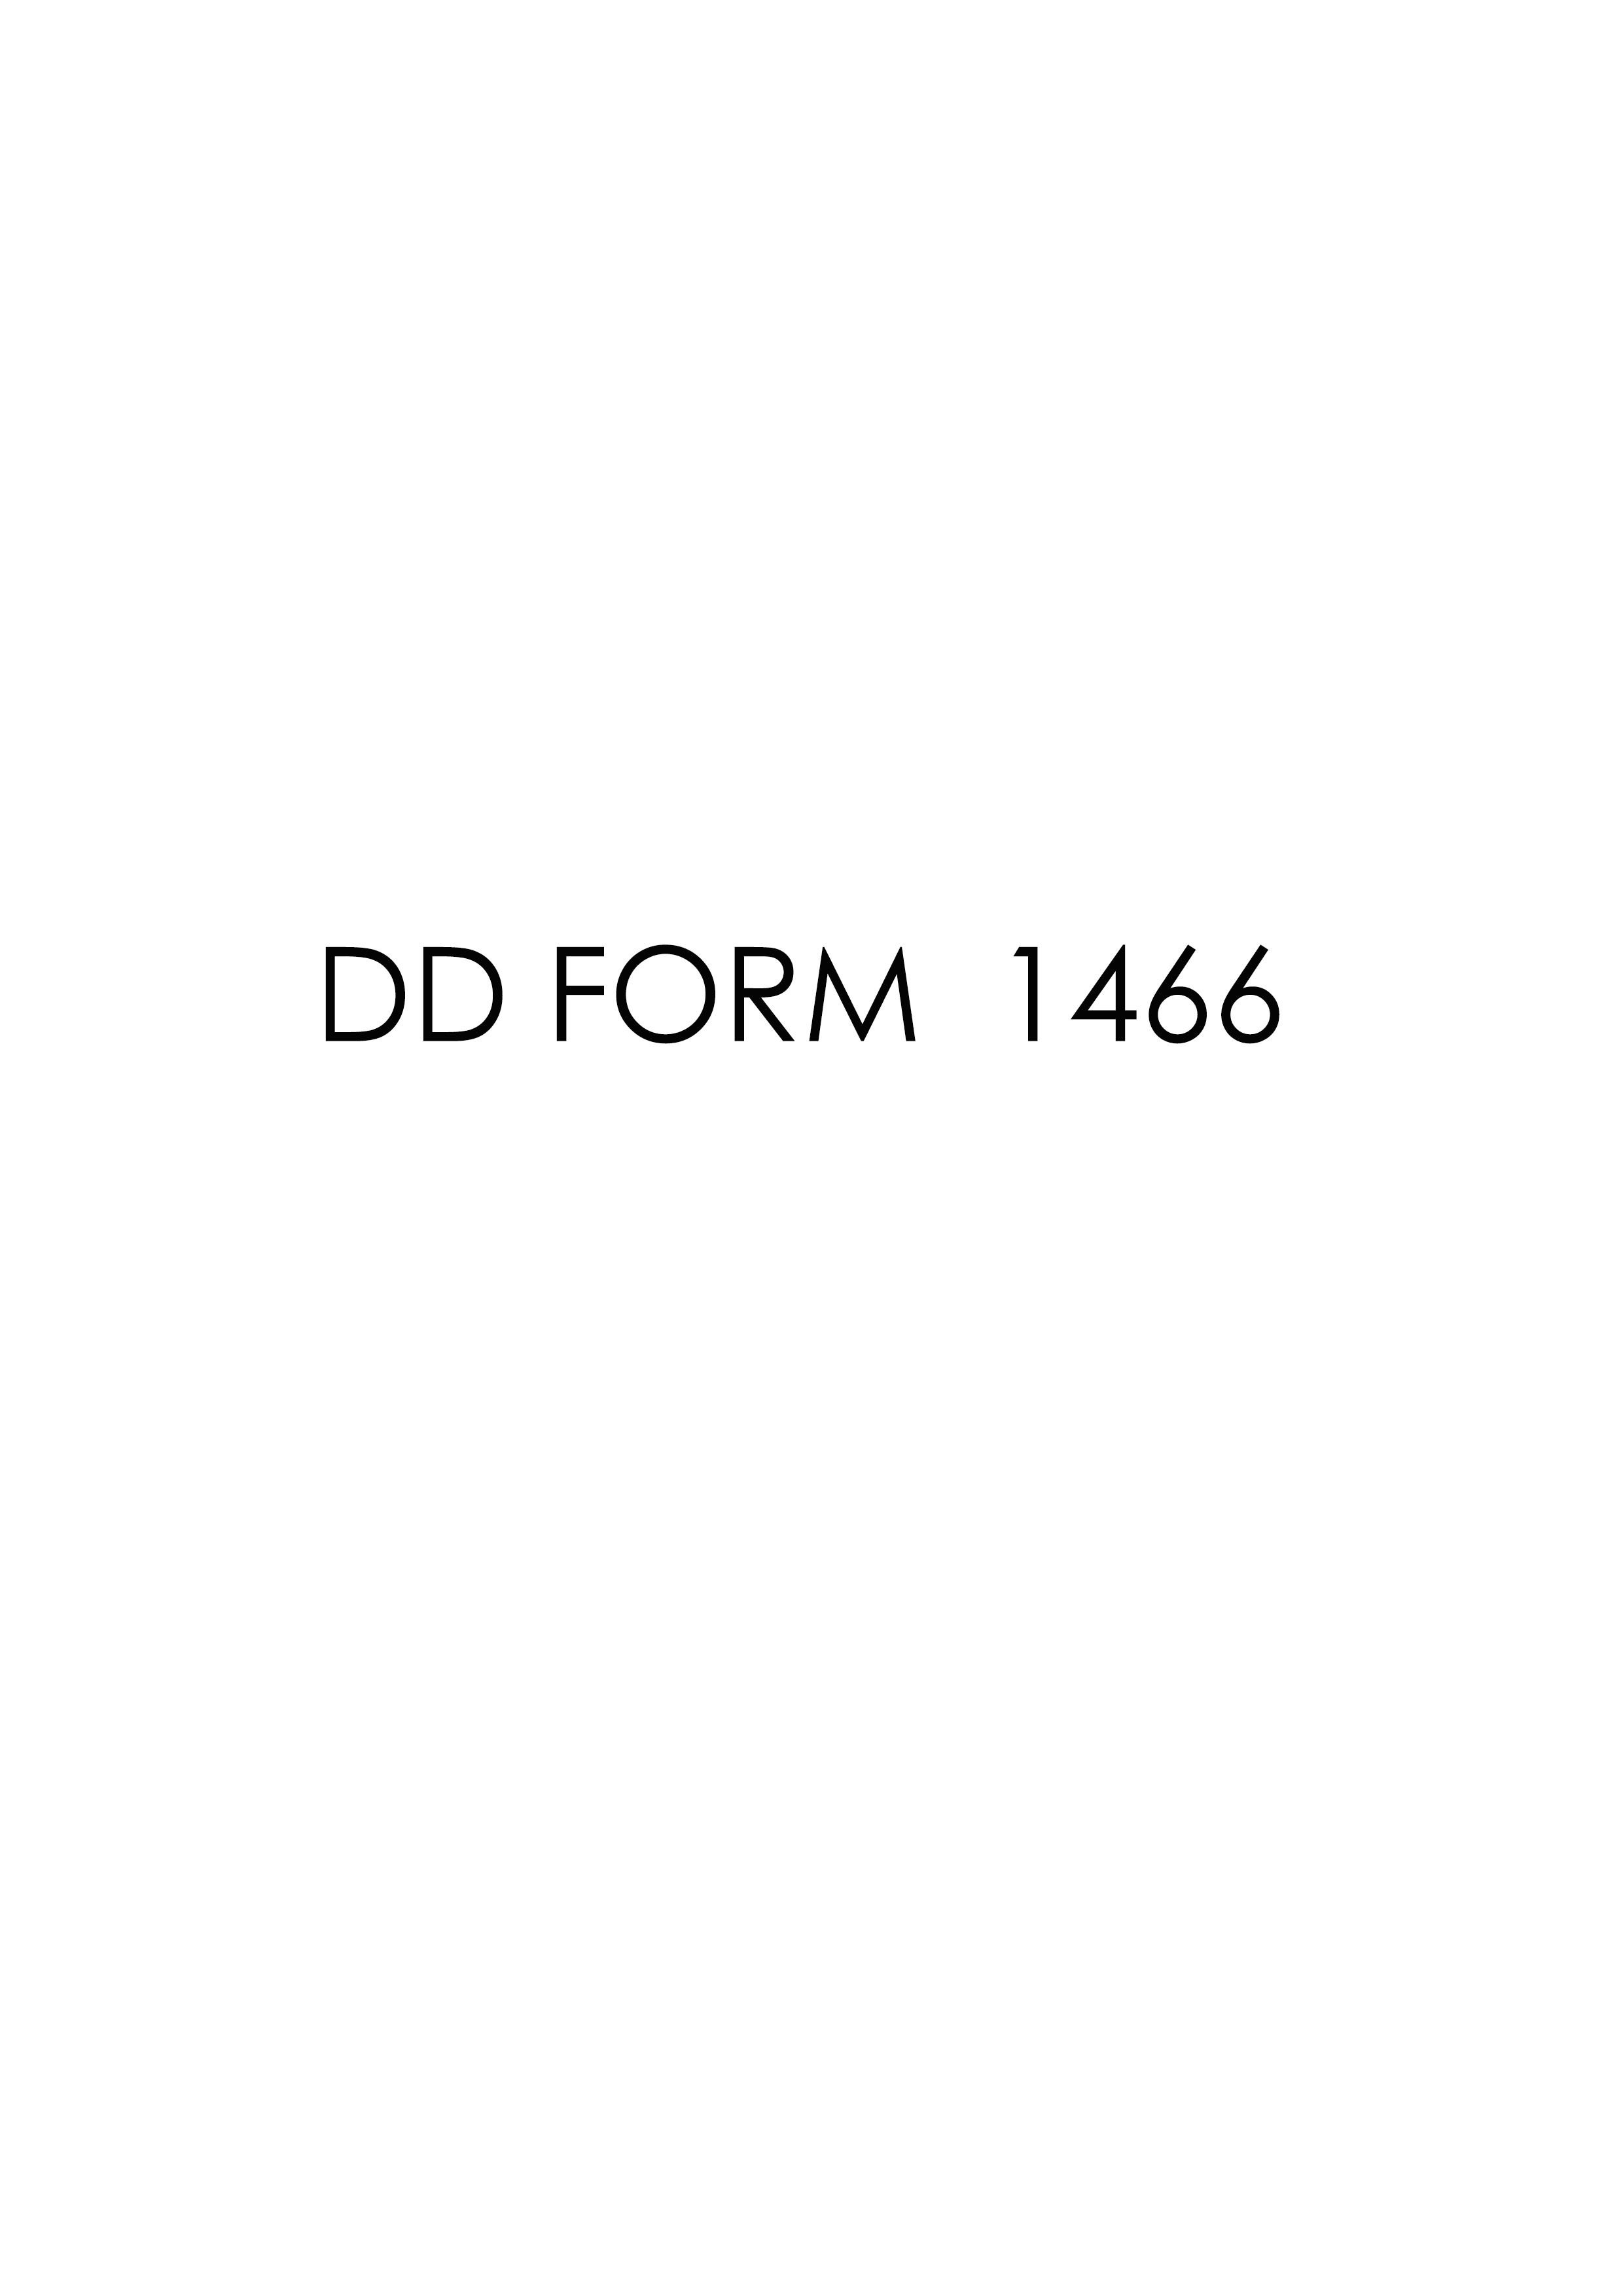 Download dd form 1466